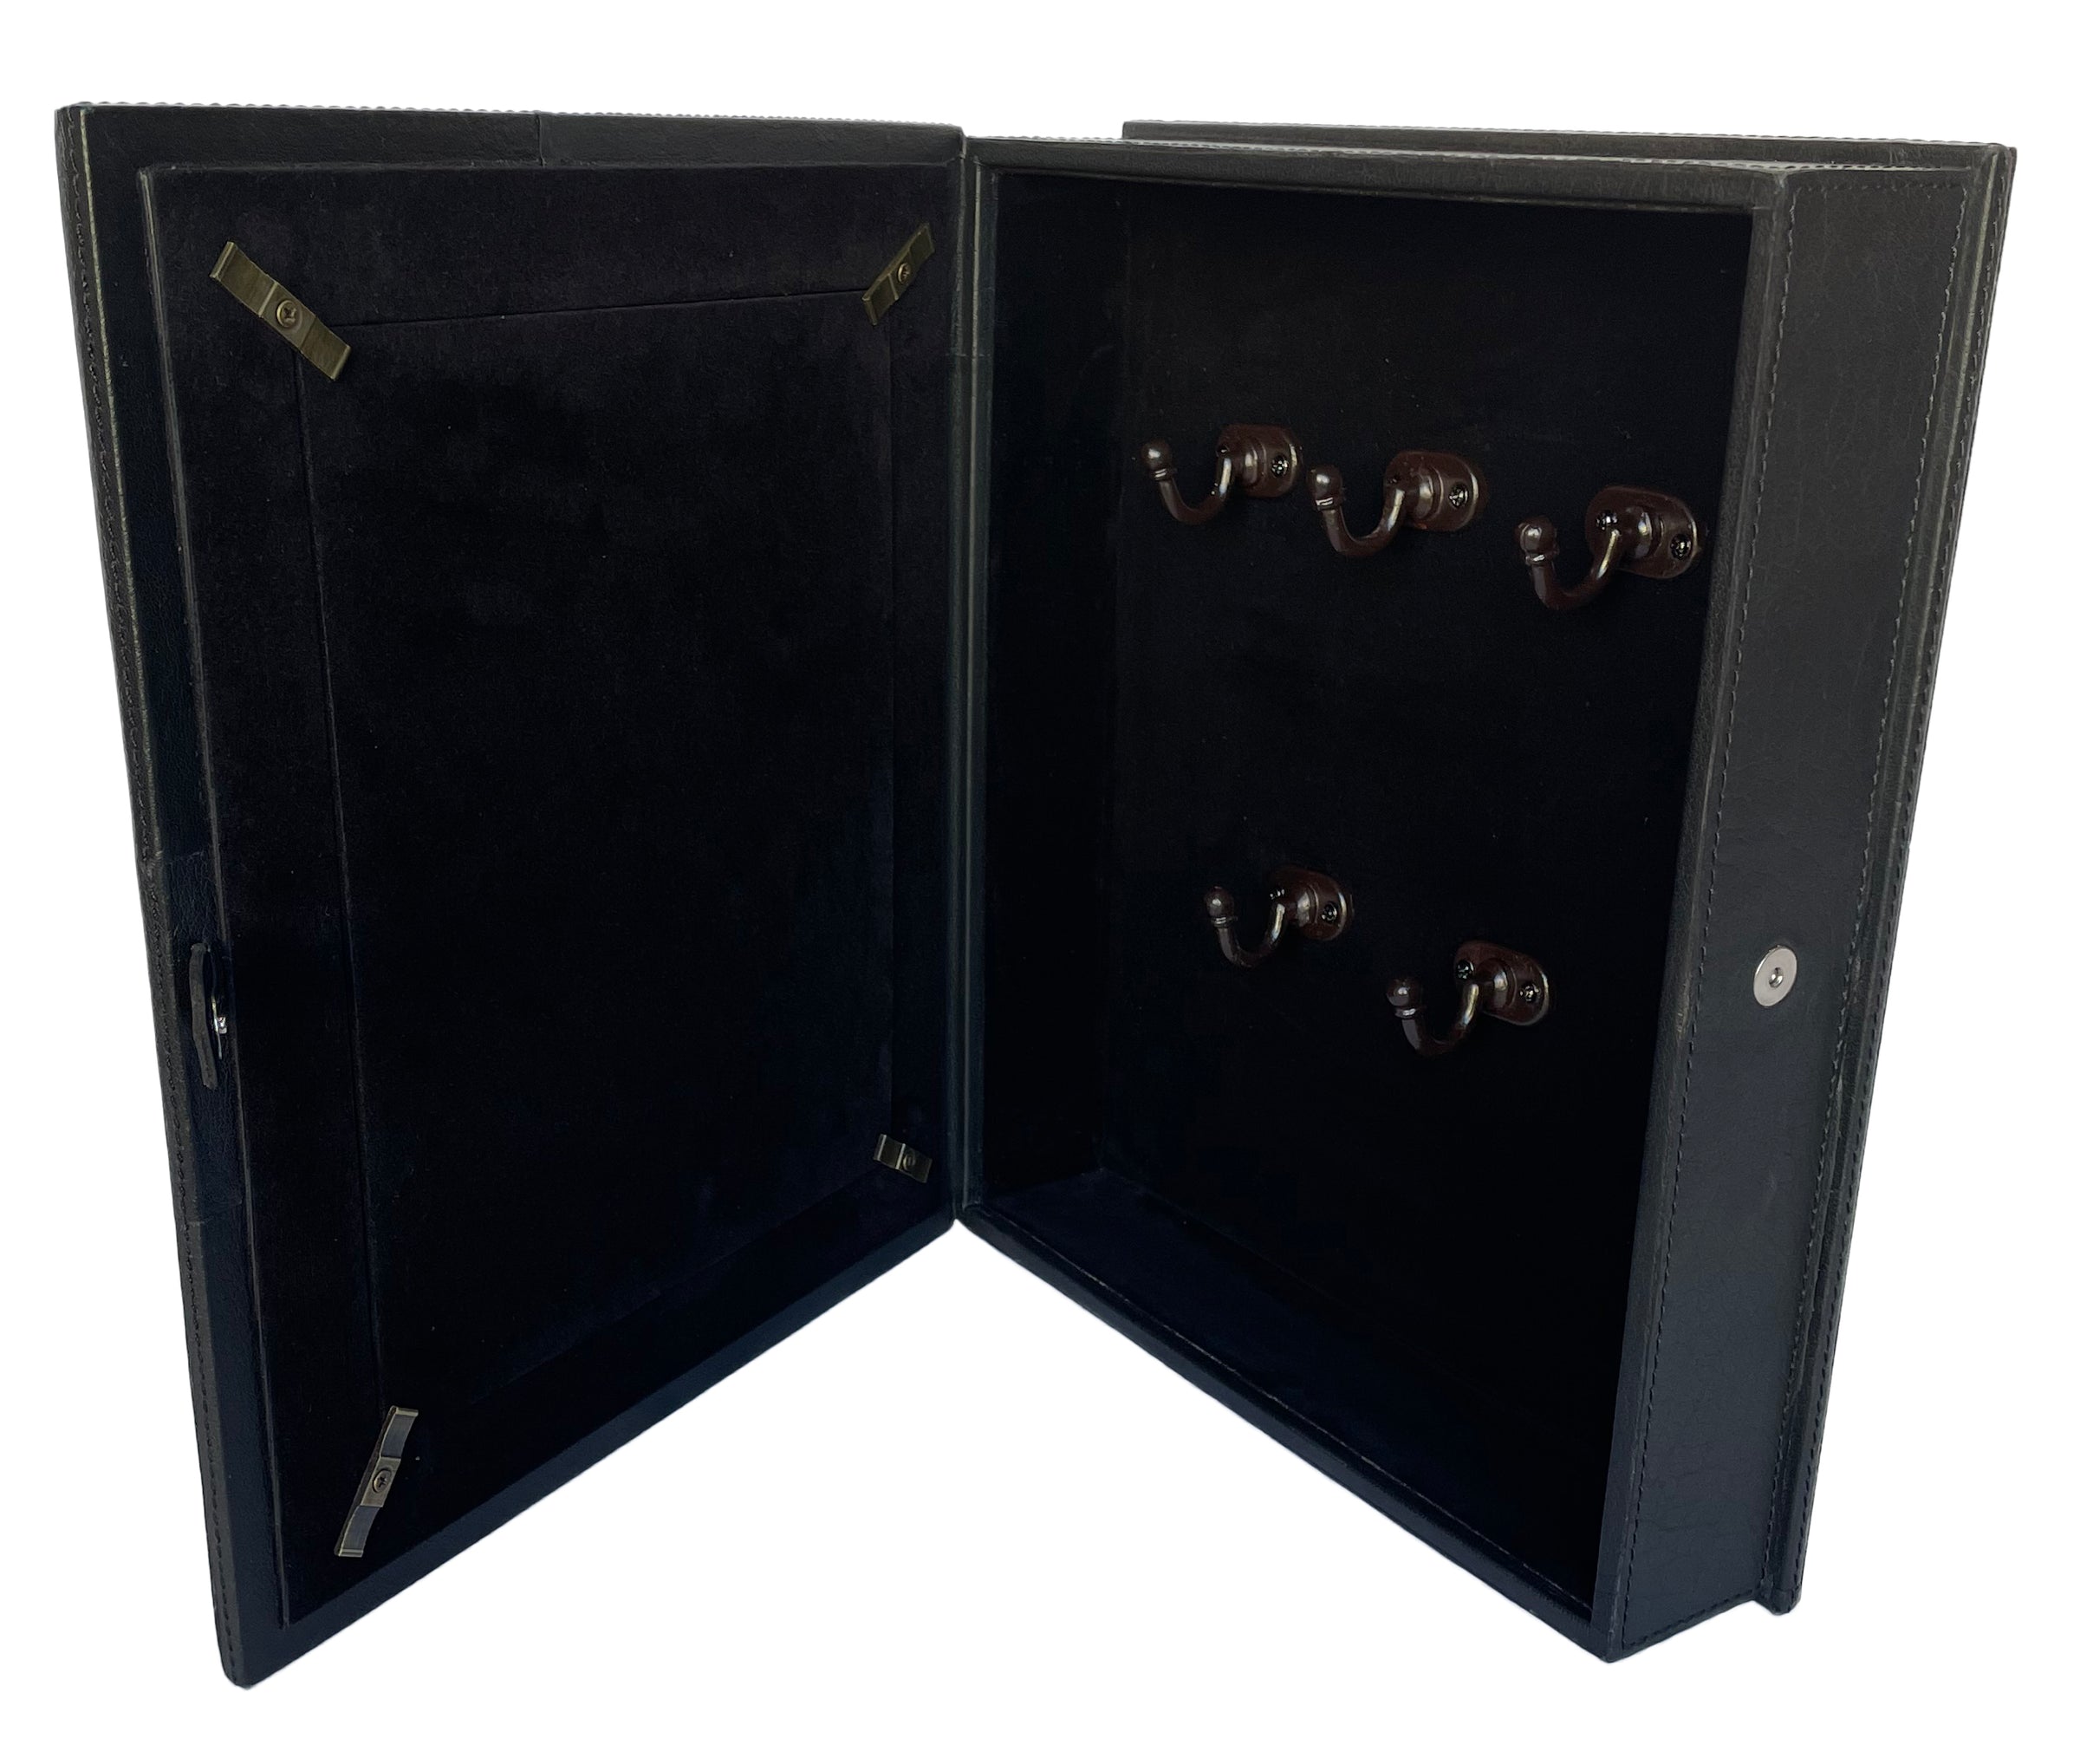 Elsa Key Holder Box in Black Leather - Large - Notbrand